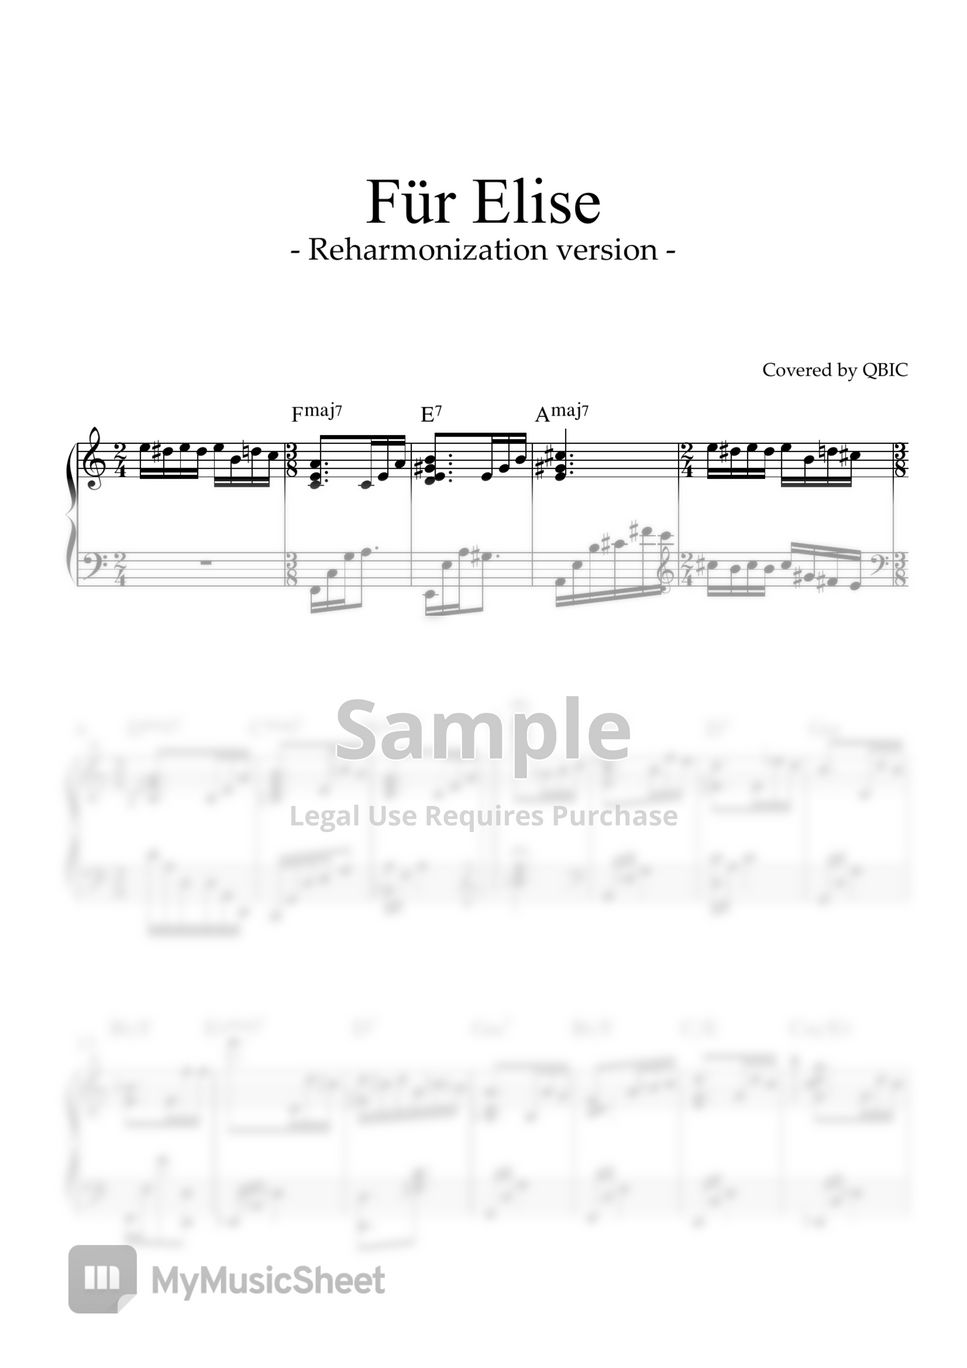 Beethoven - Fur elise by QBIC